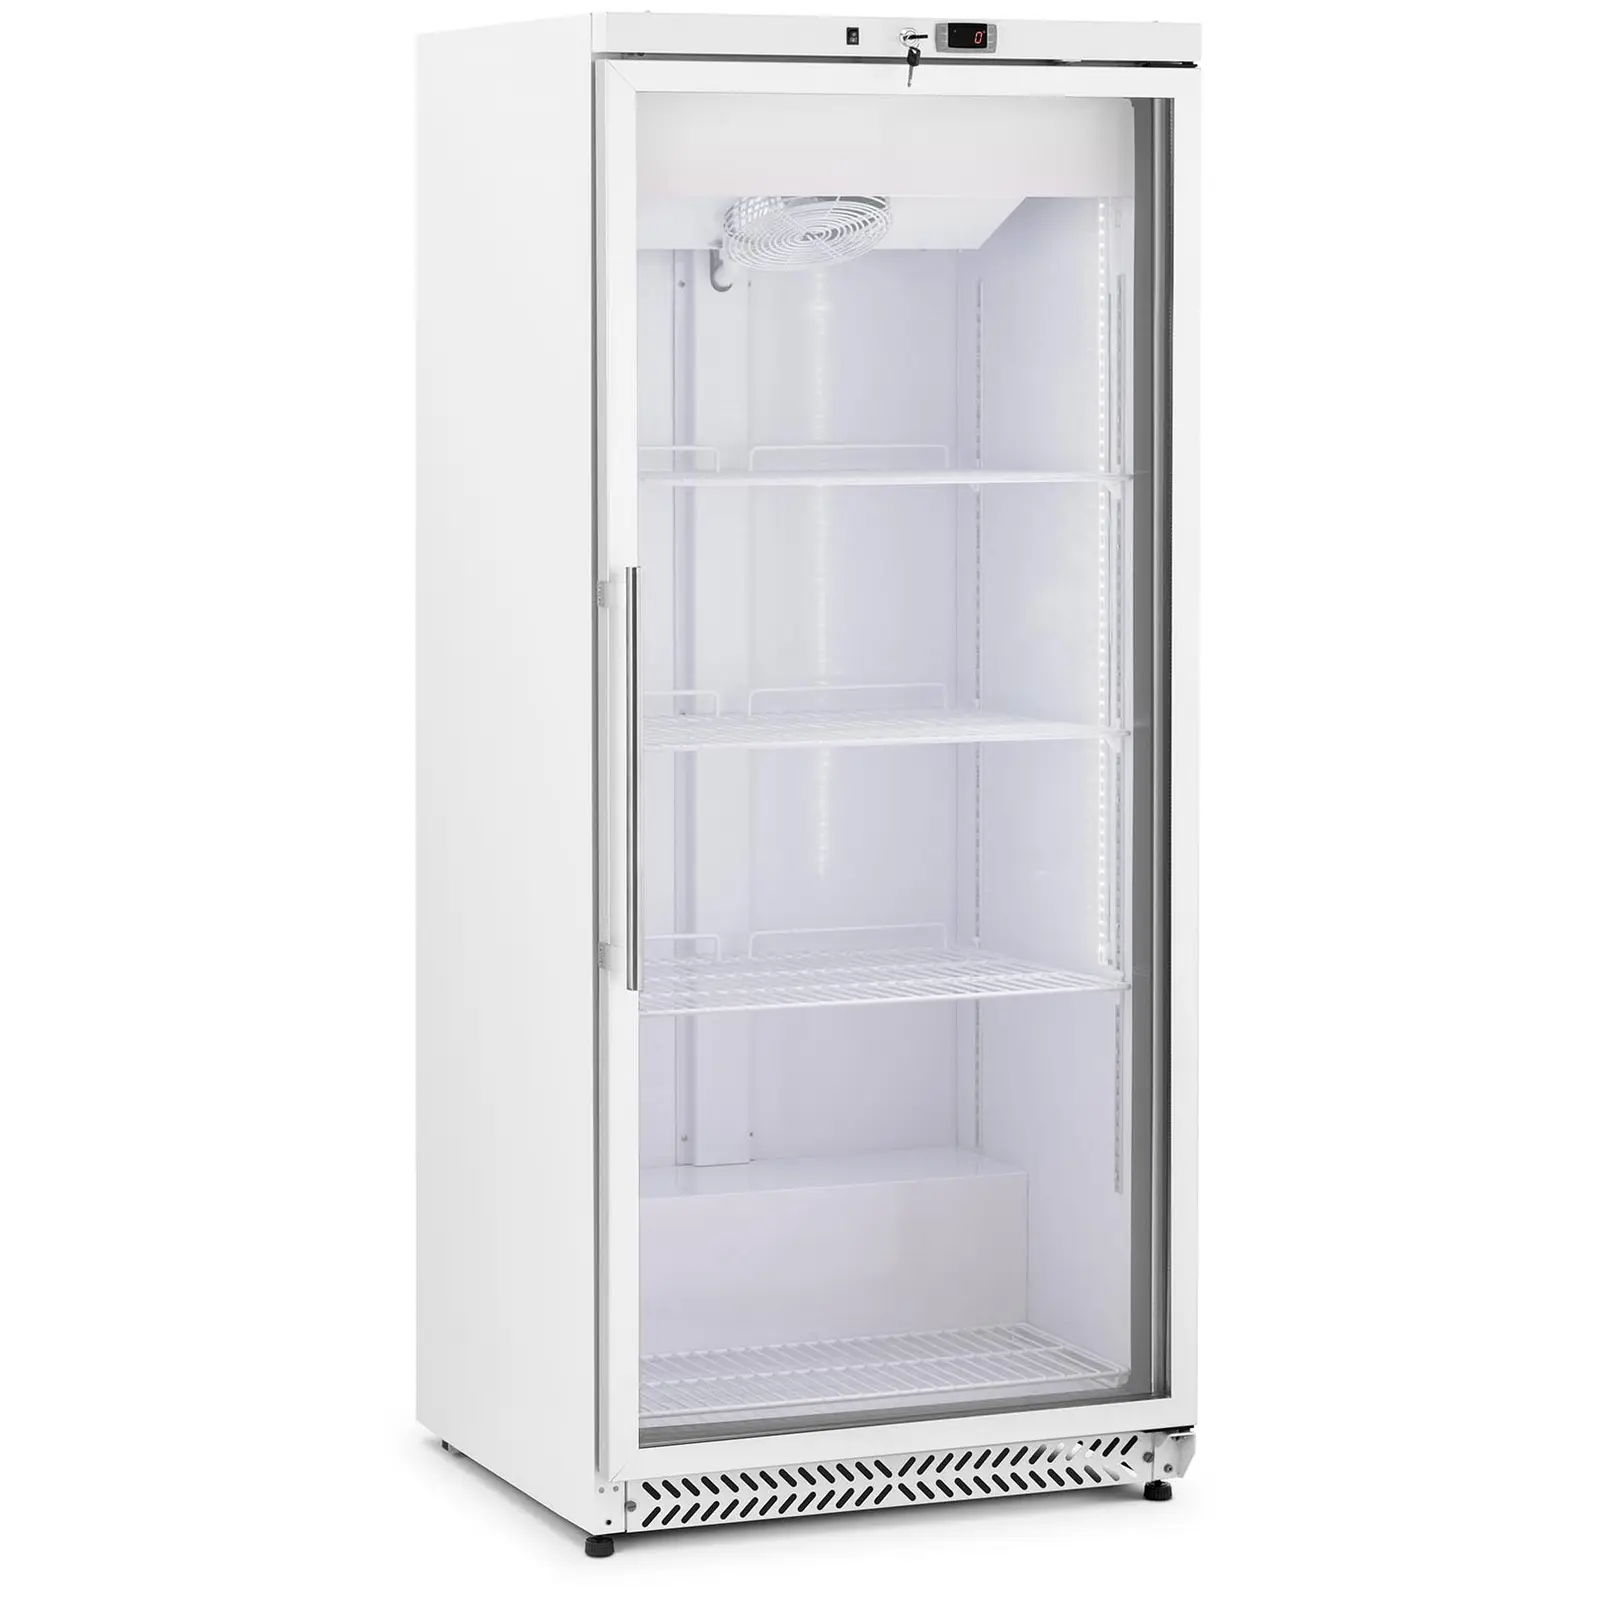 Gastro-Kühlschrank - 590 L - Royal Catering - mit Glastür - 0